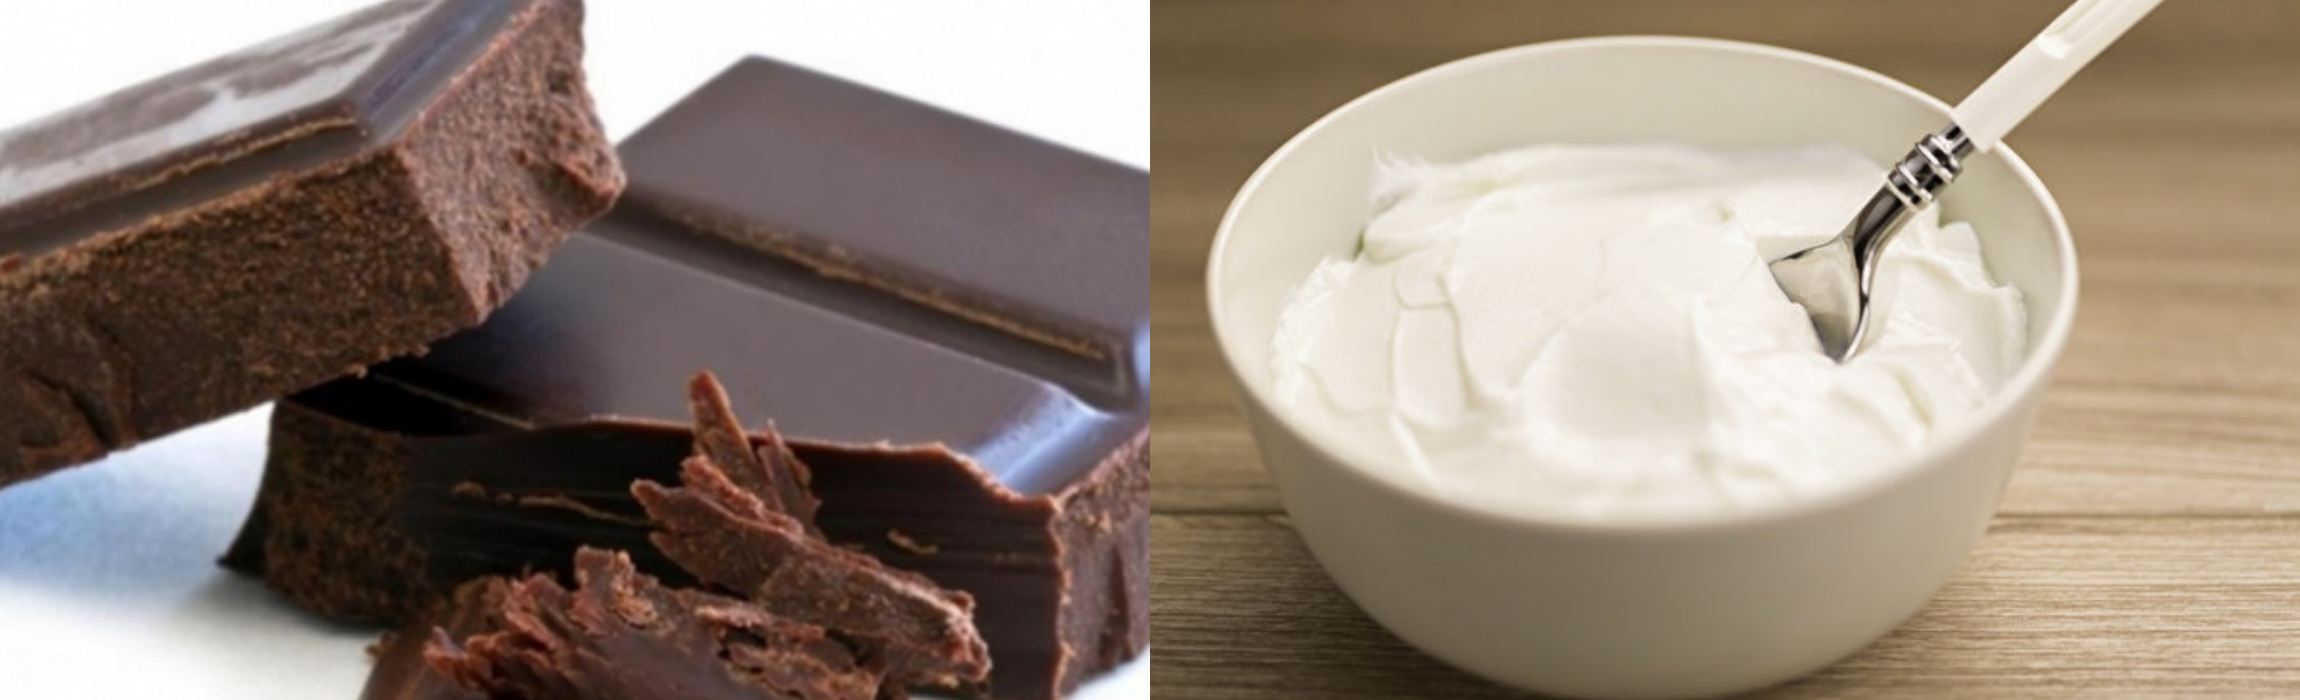 dark chocolate yogurt - 我们应该如何面对与处理焦虑？